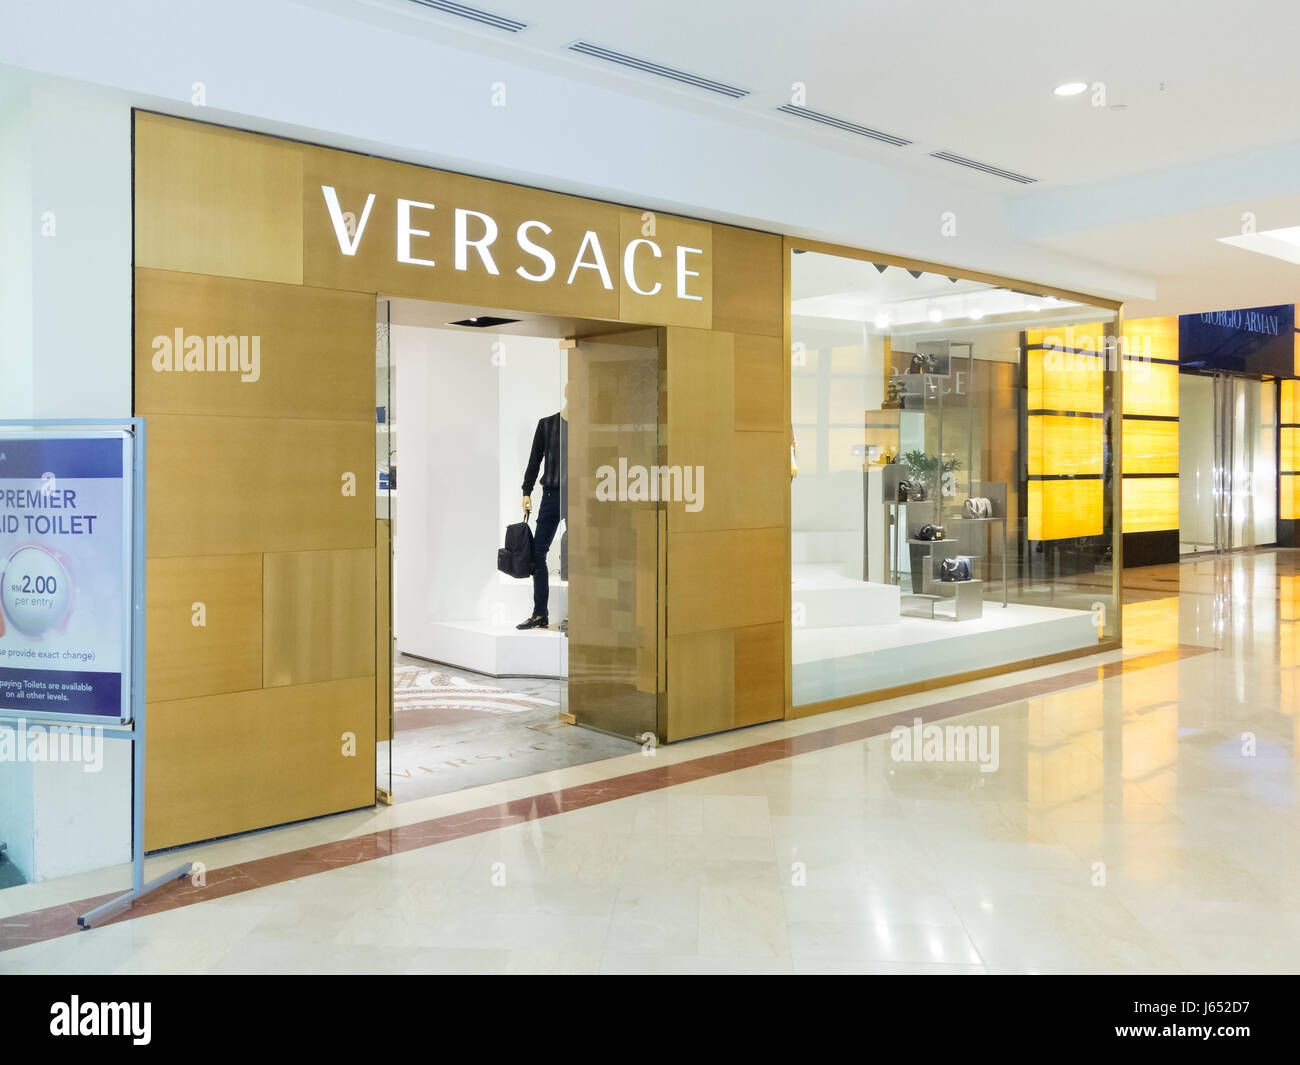 Versace shop, Malaysia Stock Photo - Alamy